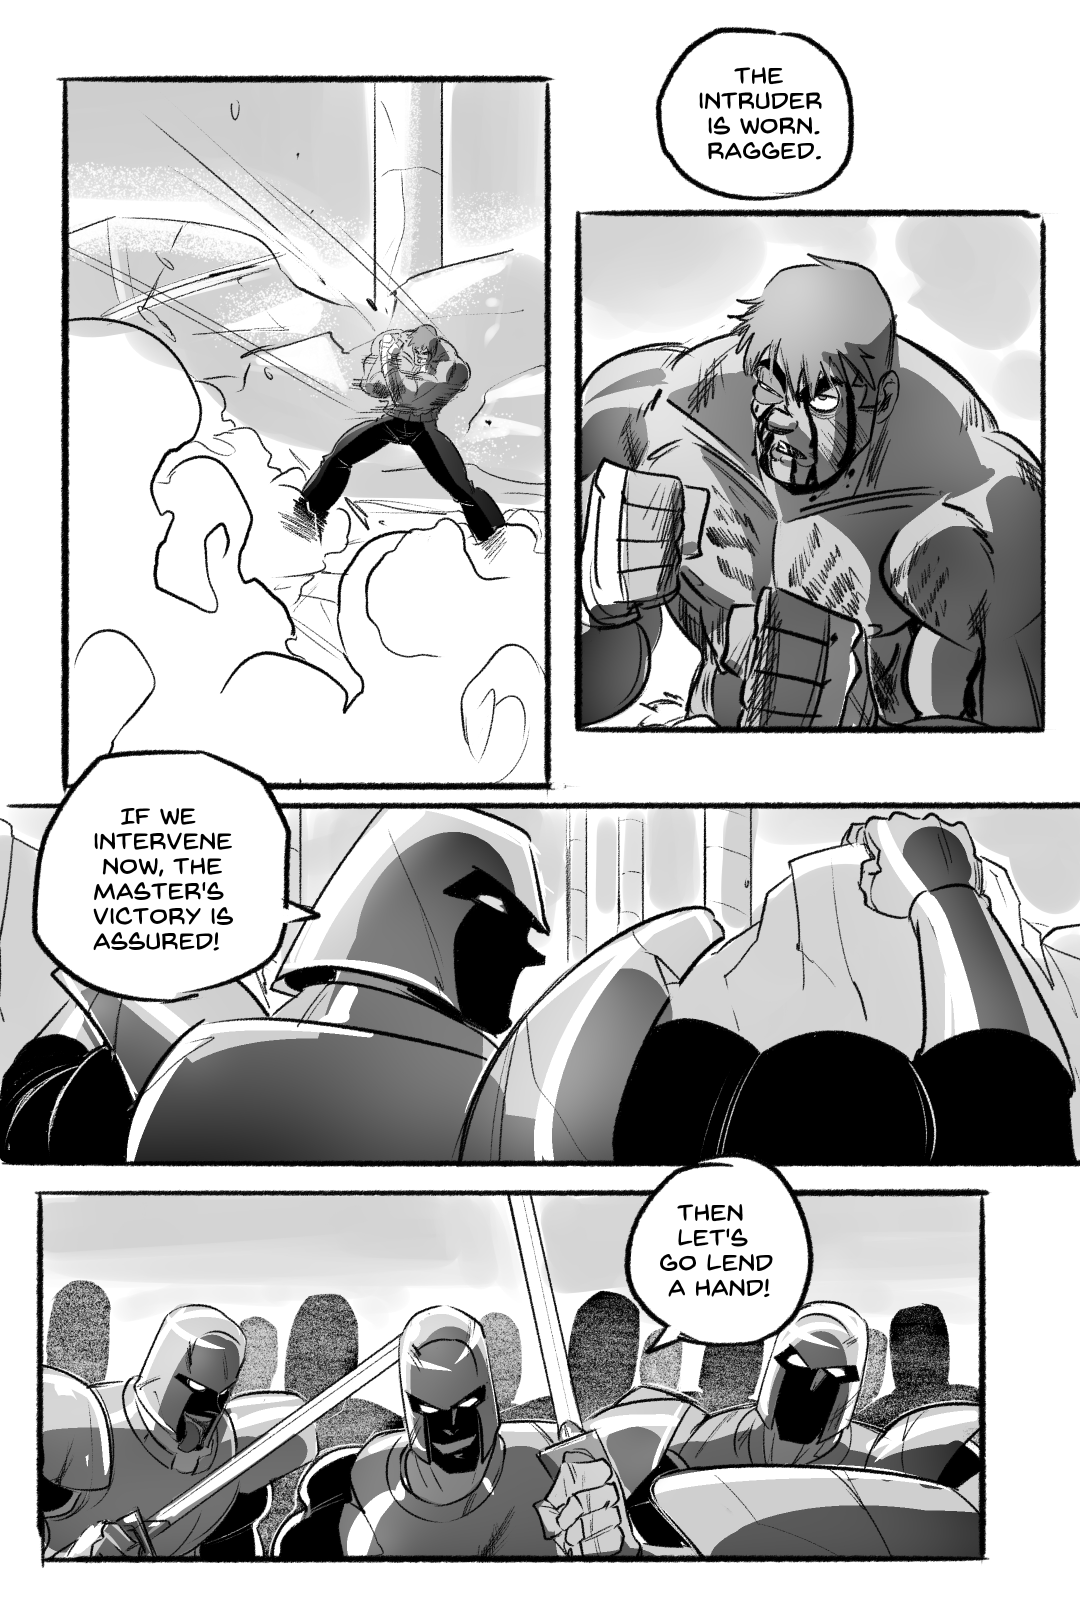 The Showdown Part VI panel 9